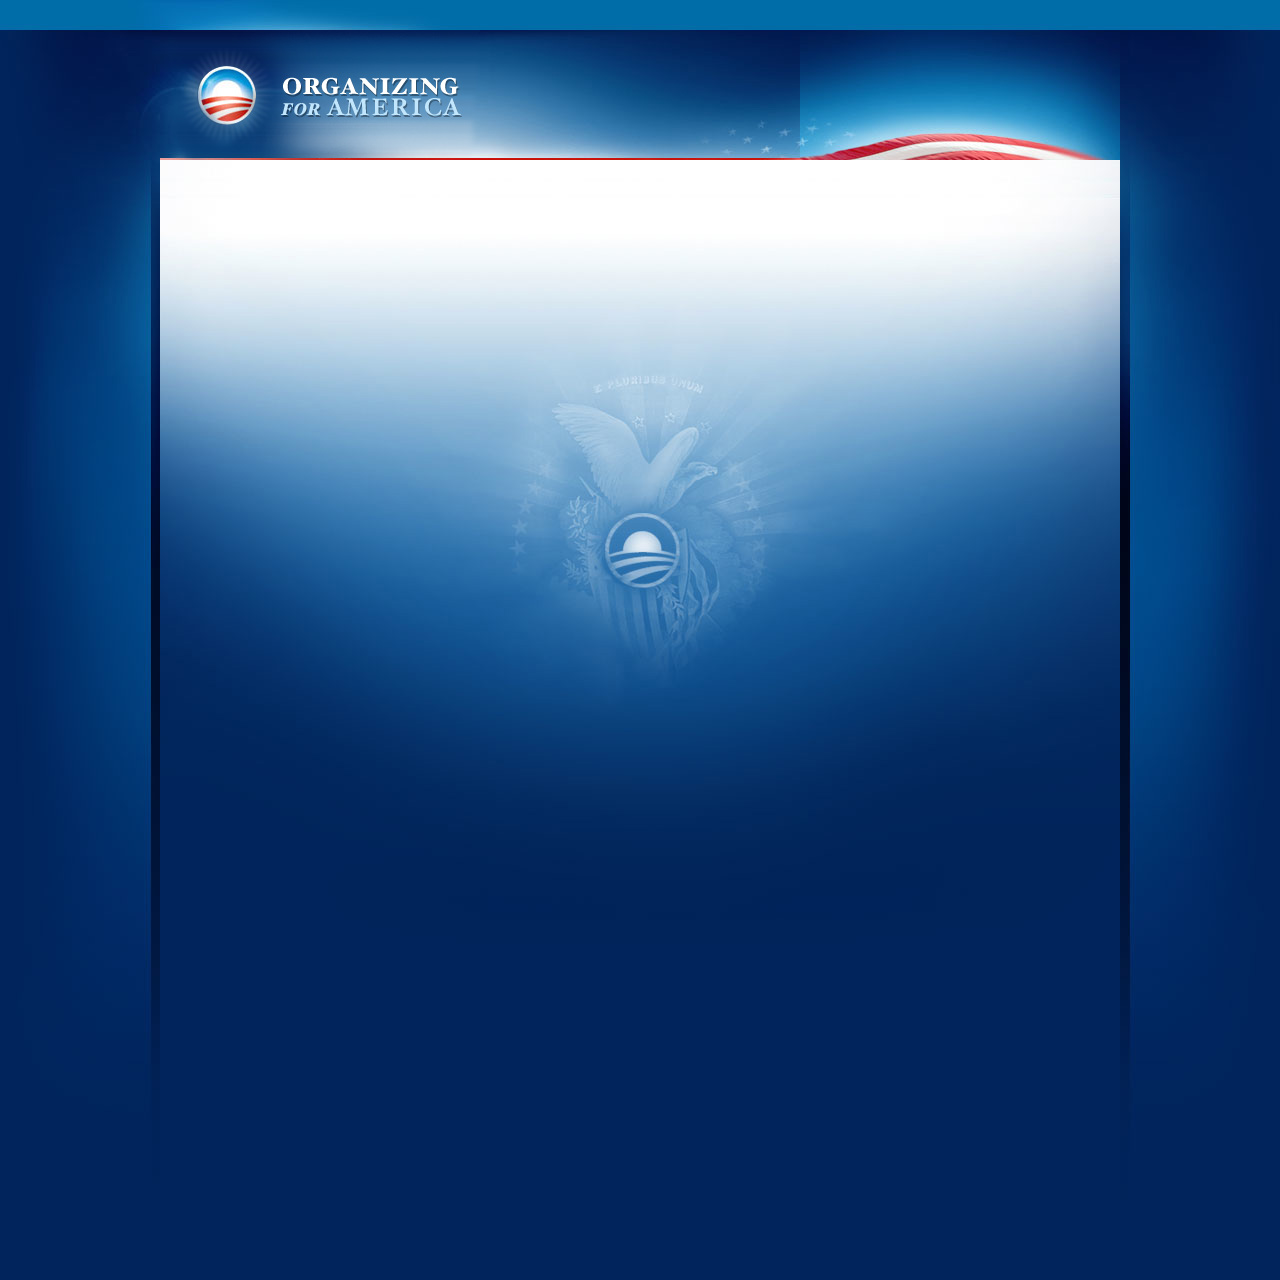 The Obama seal (website background)